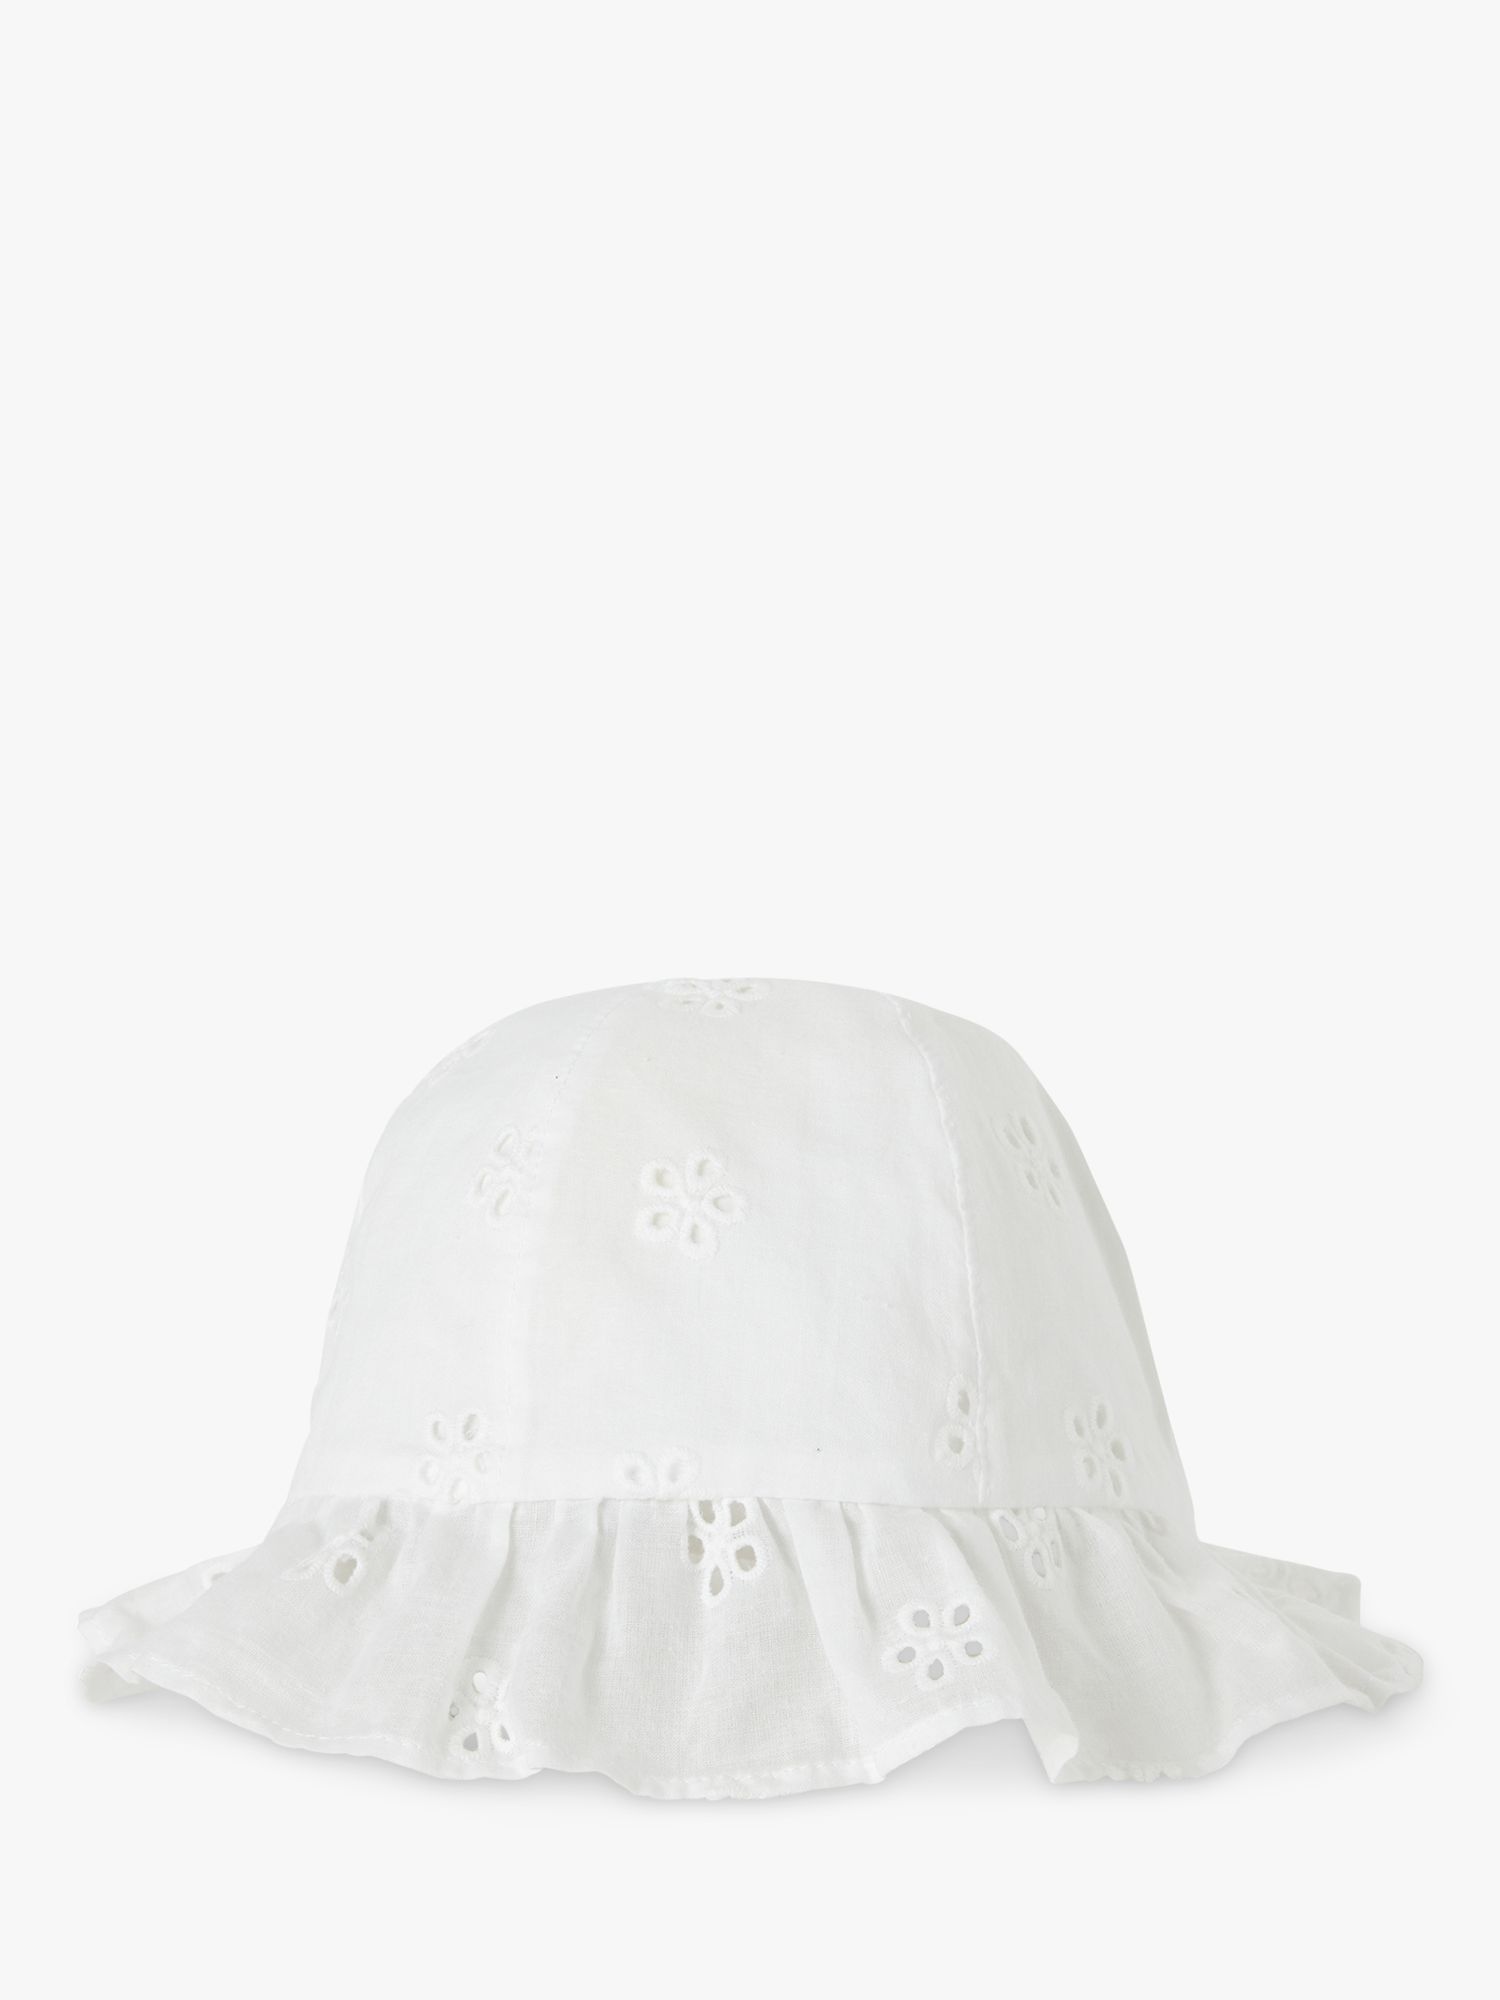 Benetton Baby Broderie Anglaise Sun Hat, Optical White, XXS